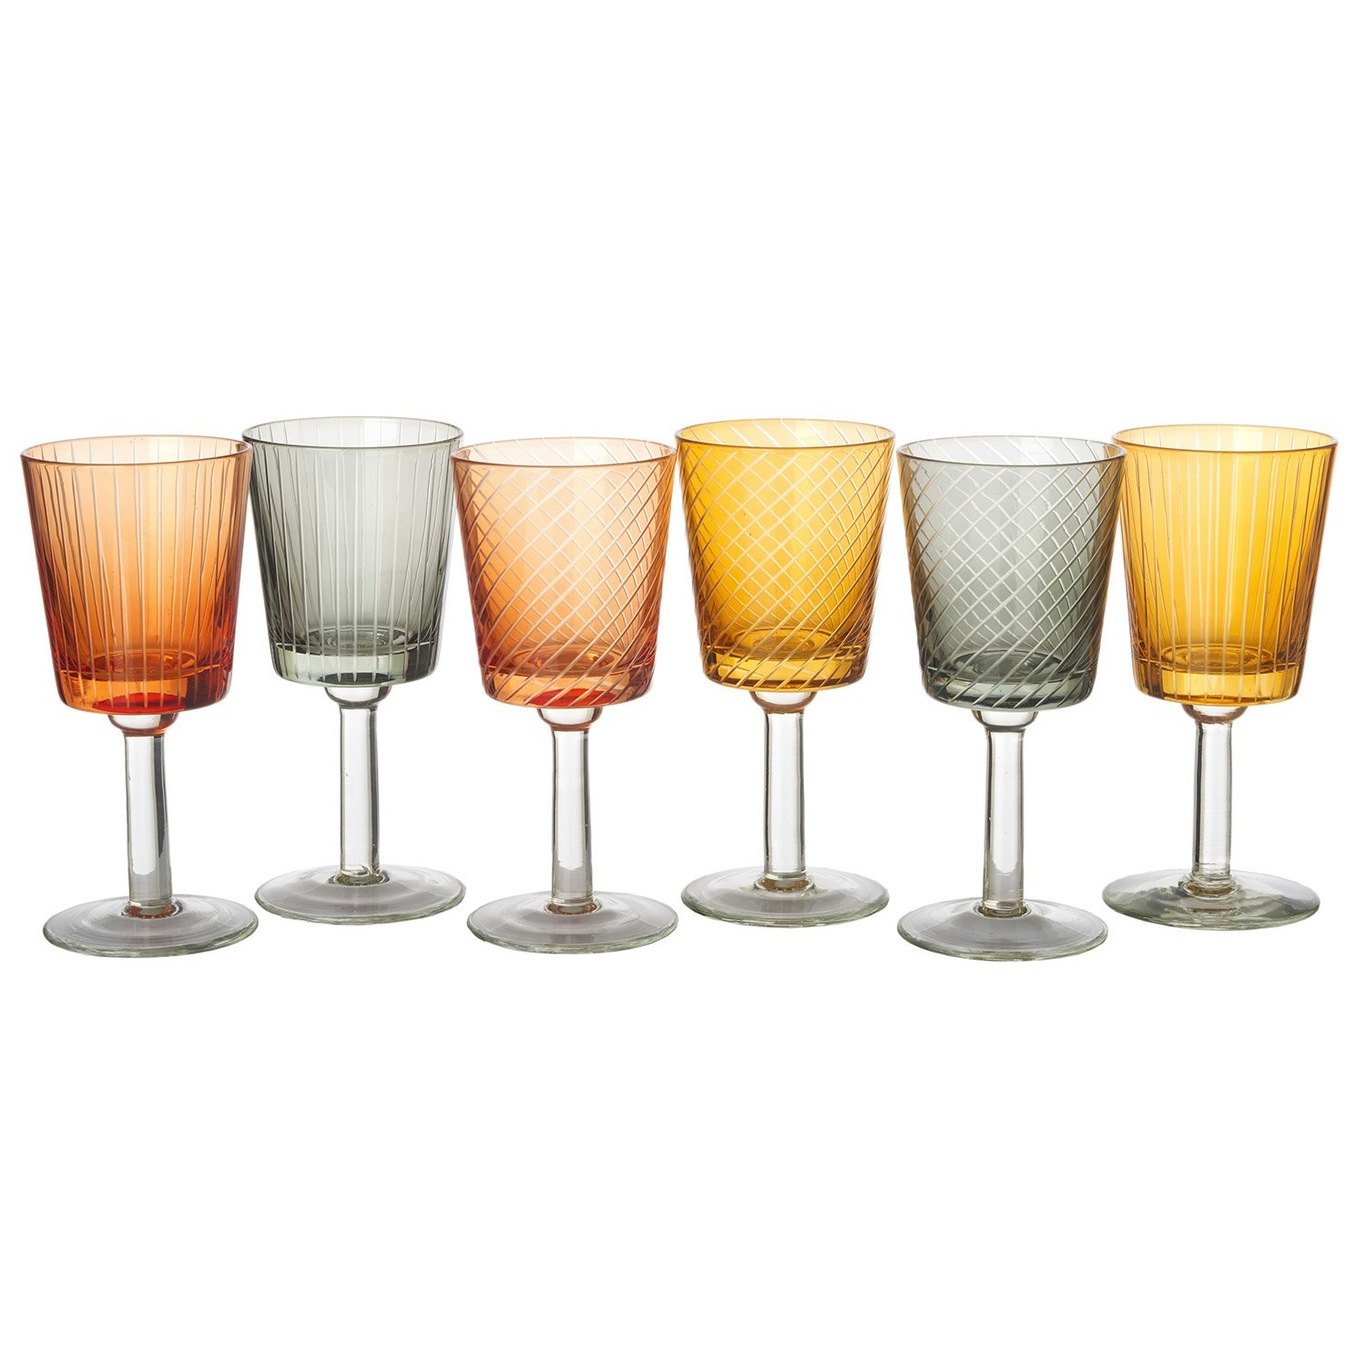 https://royaldesign.com/image/2/pols-potten-wine-glass-library-set-6-0?w=800&quality=80